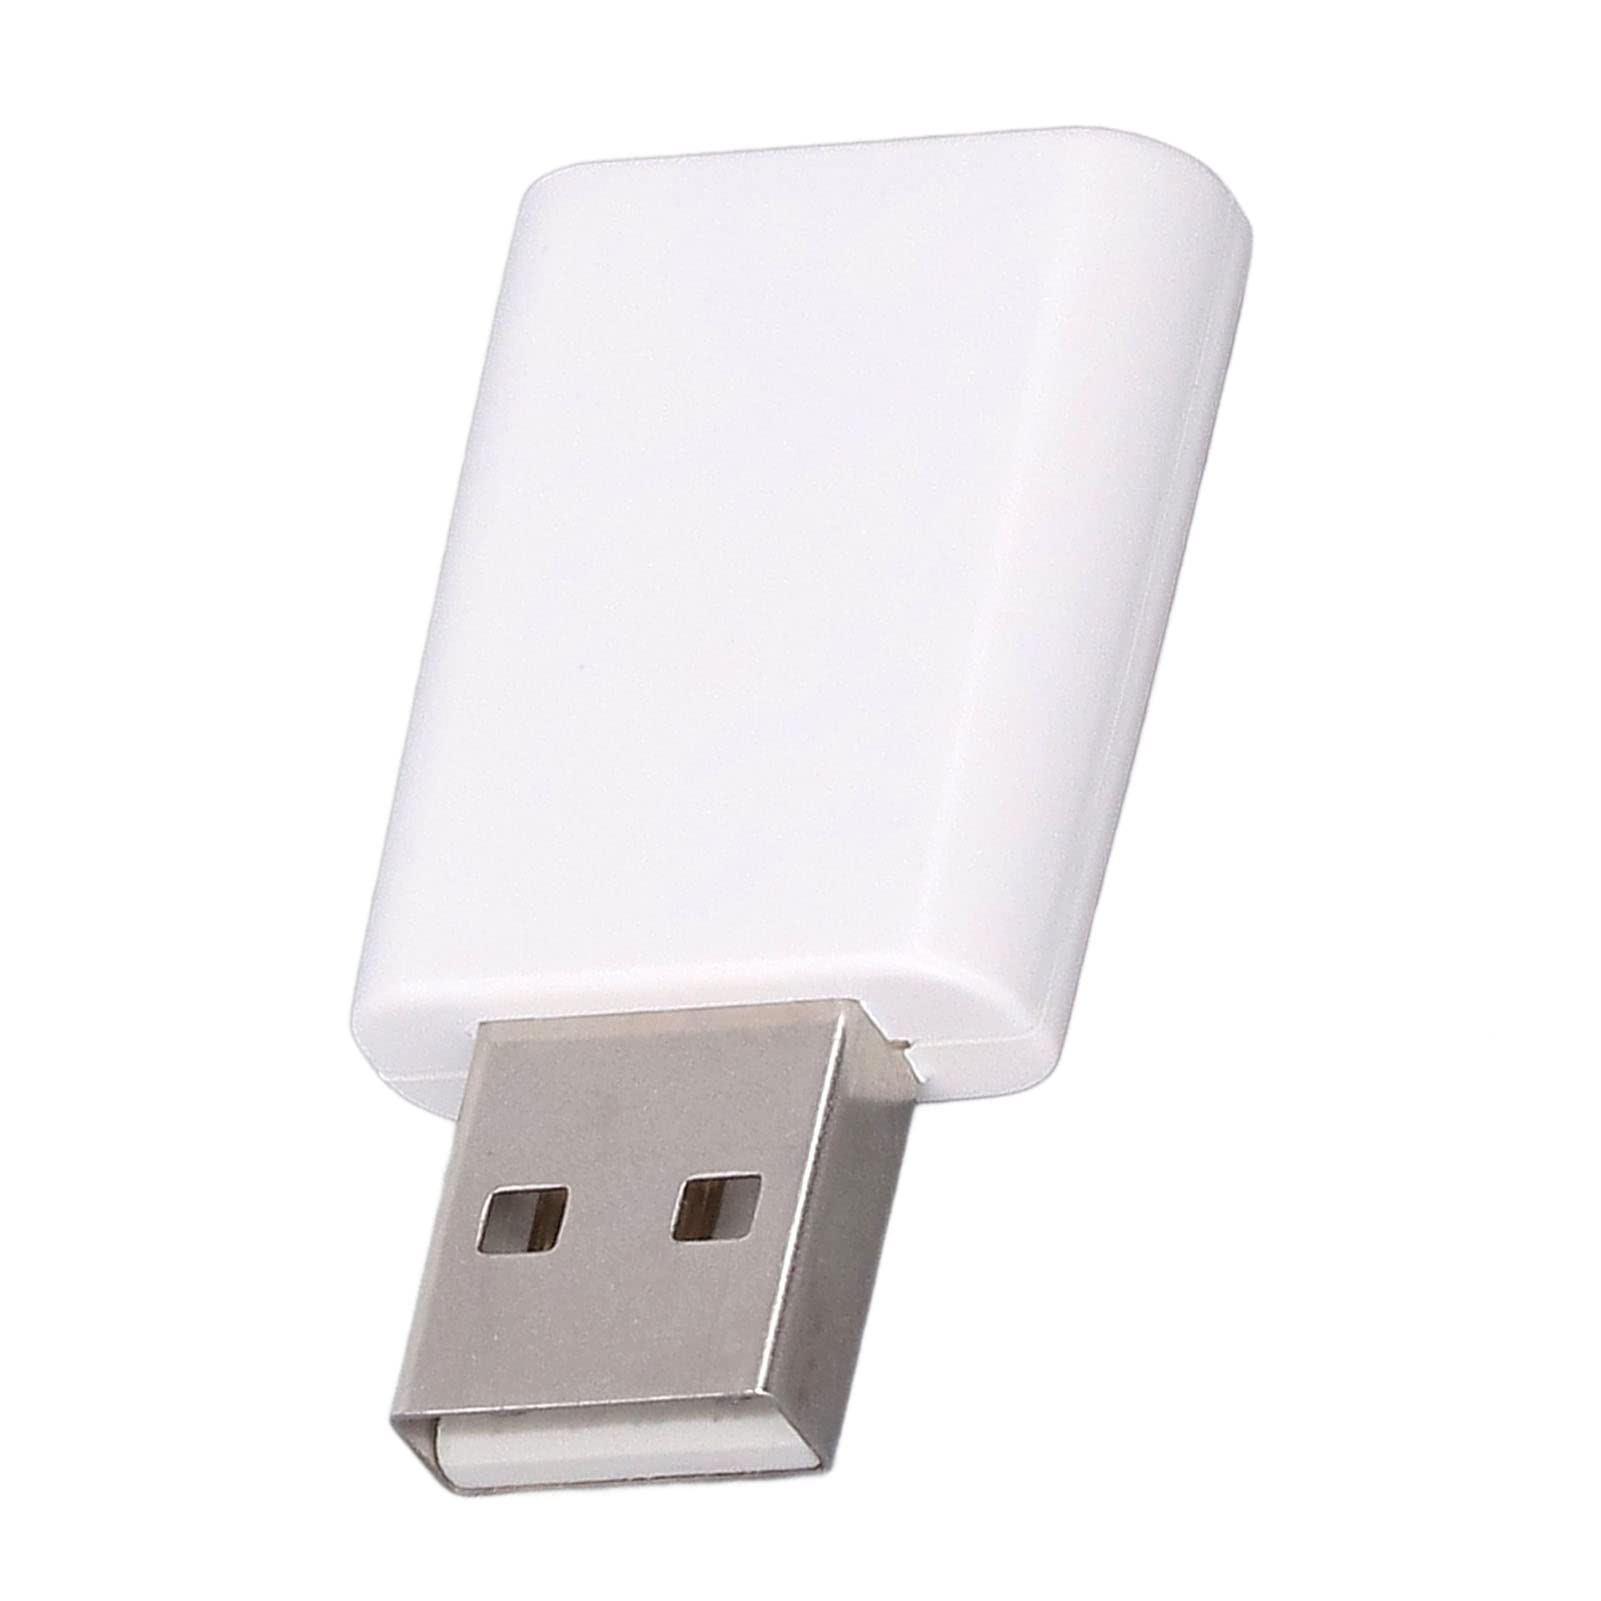 USB Gateway Repeater, Portable Gateway Signal Booster, Gateway Extenders Signal Booster for Home